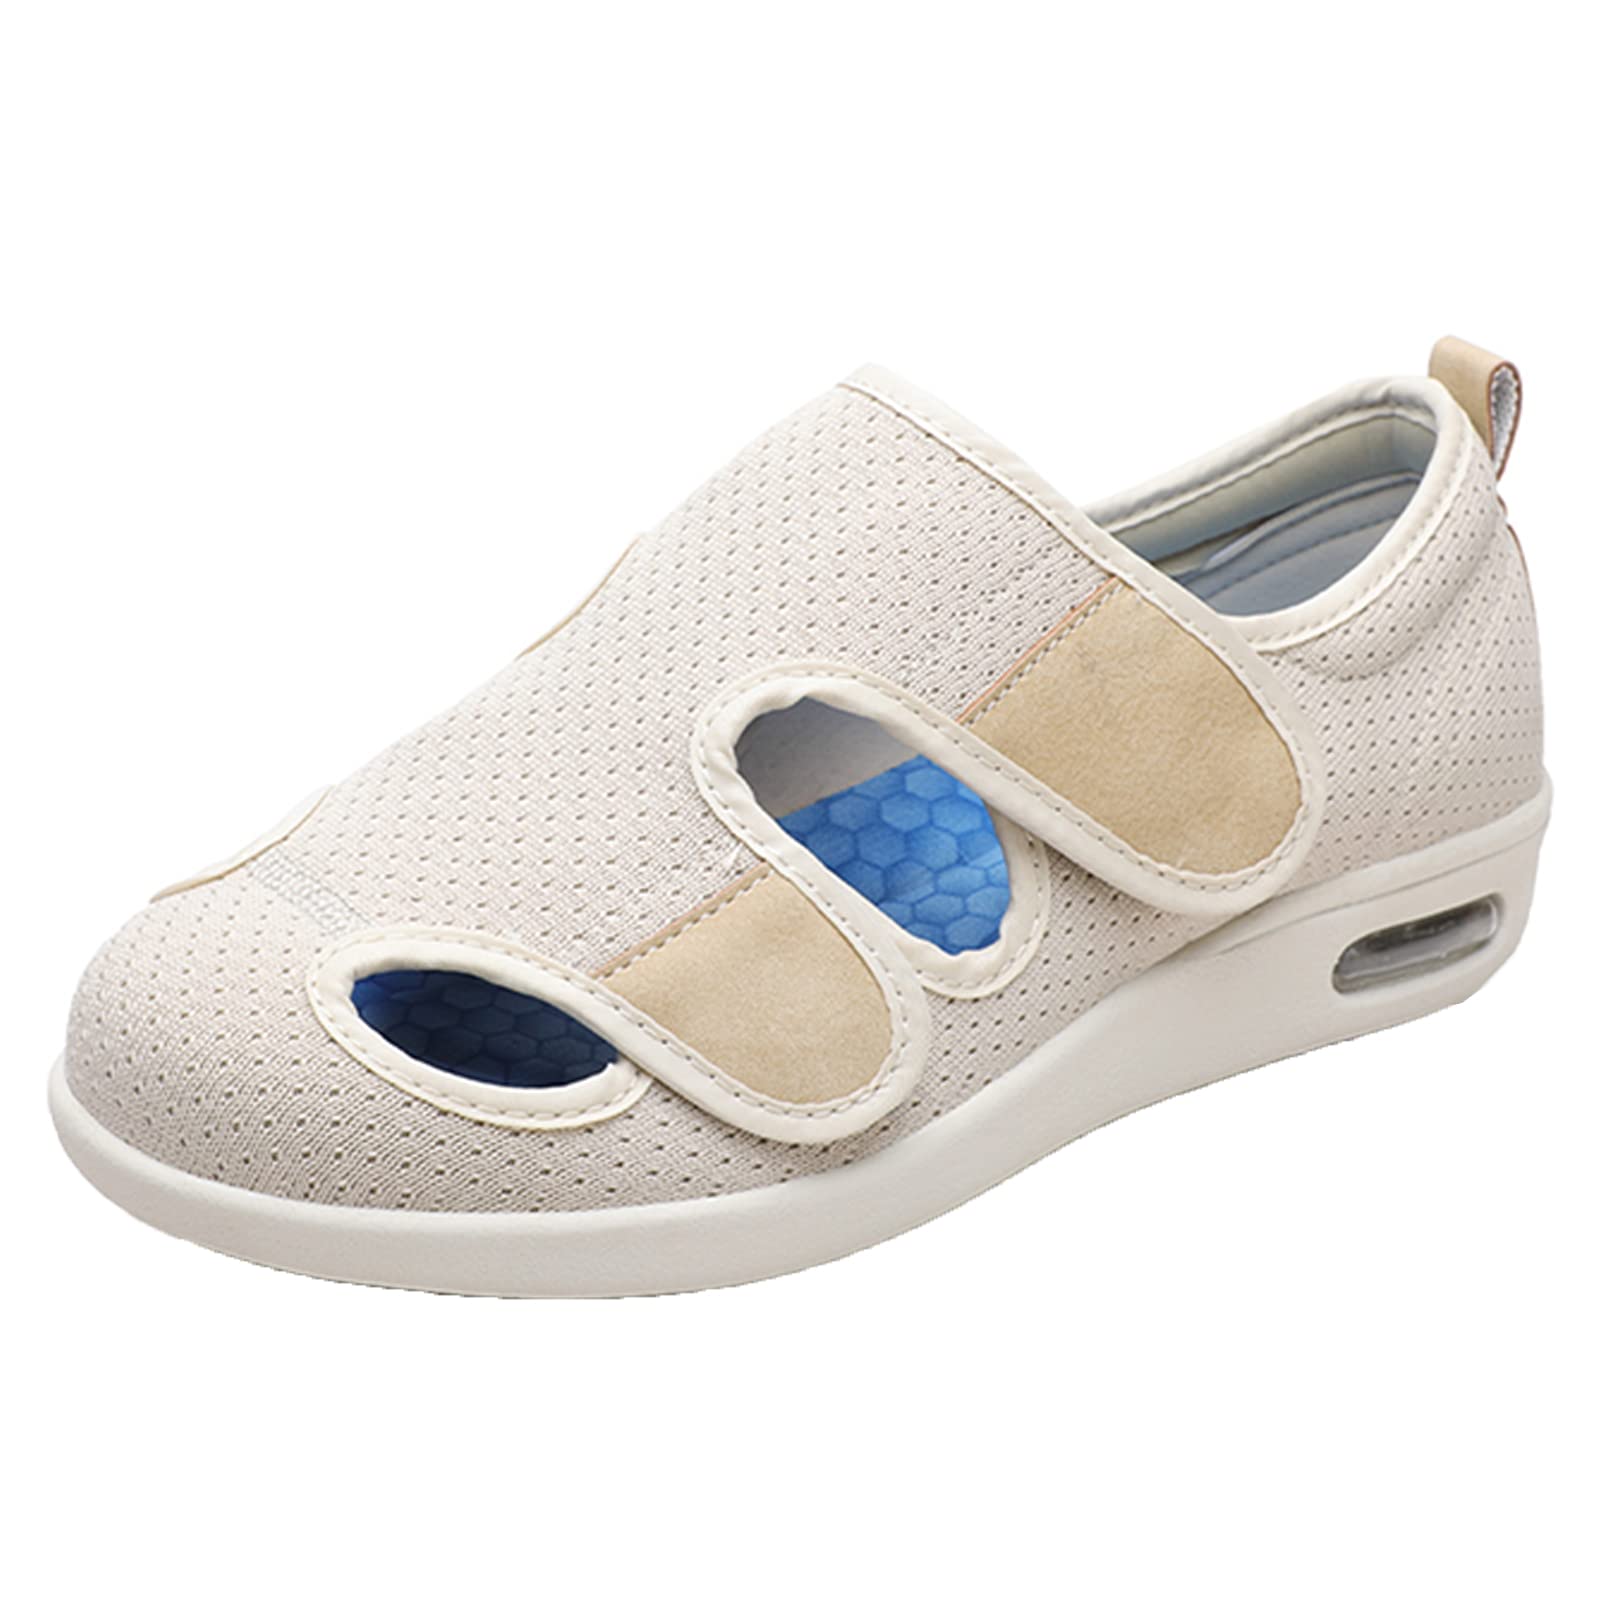 Mens Walking Tennis Shoes - Slip On Memory Foam Lightweight Casual Sneakers  for Gym Travel Work at Rs 280/pair | Balia Tun | Balasore | ID: 23190778462